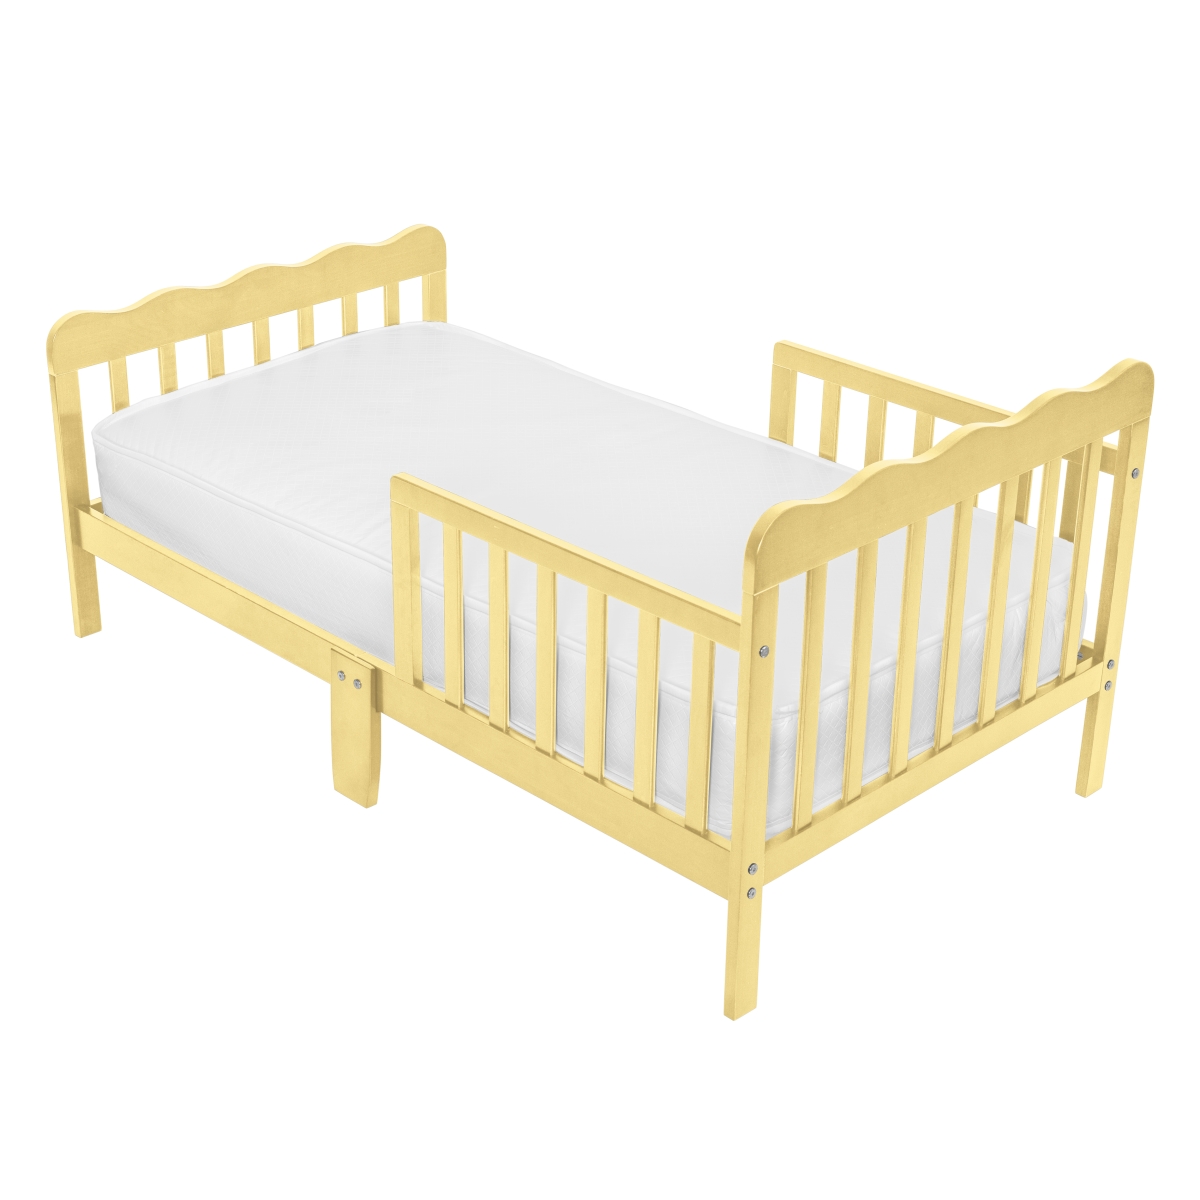 830-n Wood Toddler Bed, Natural